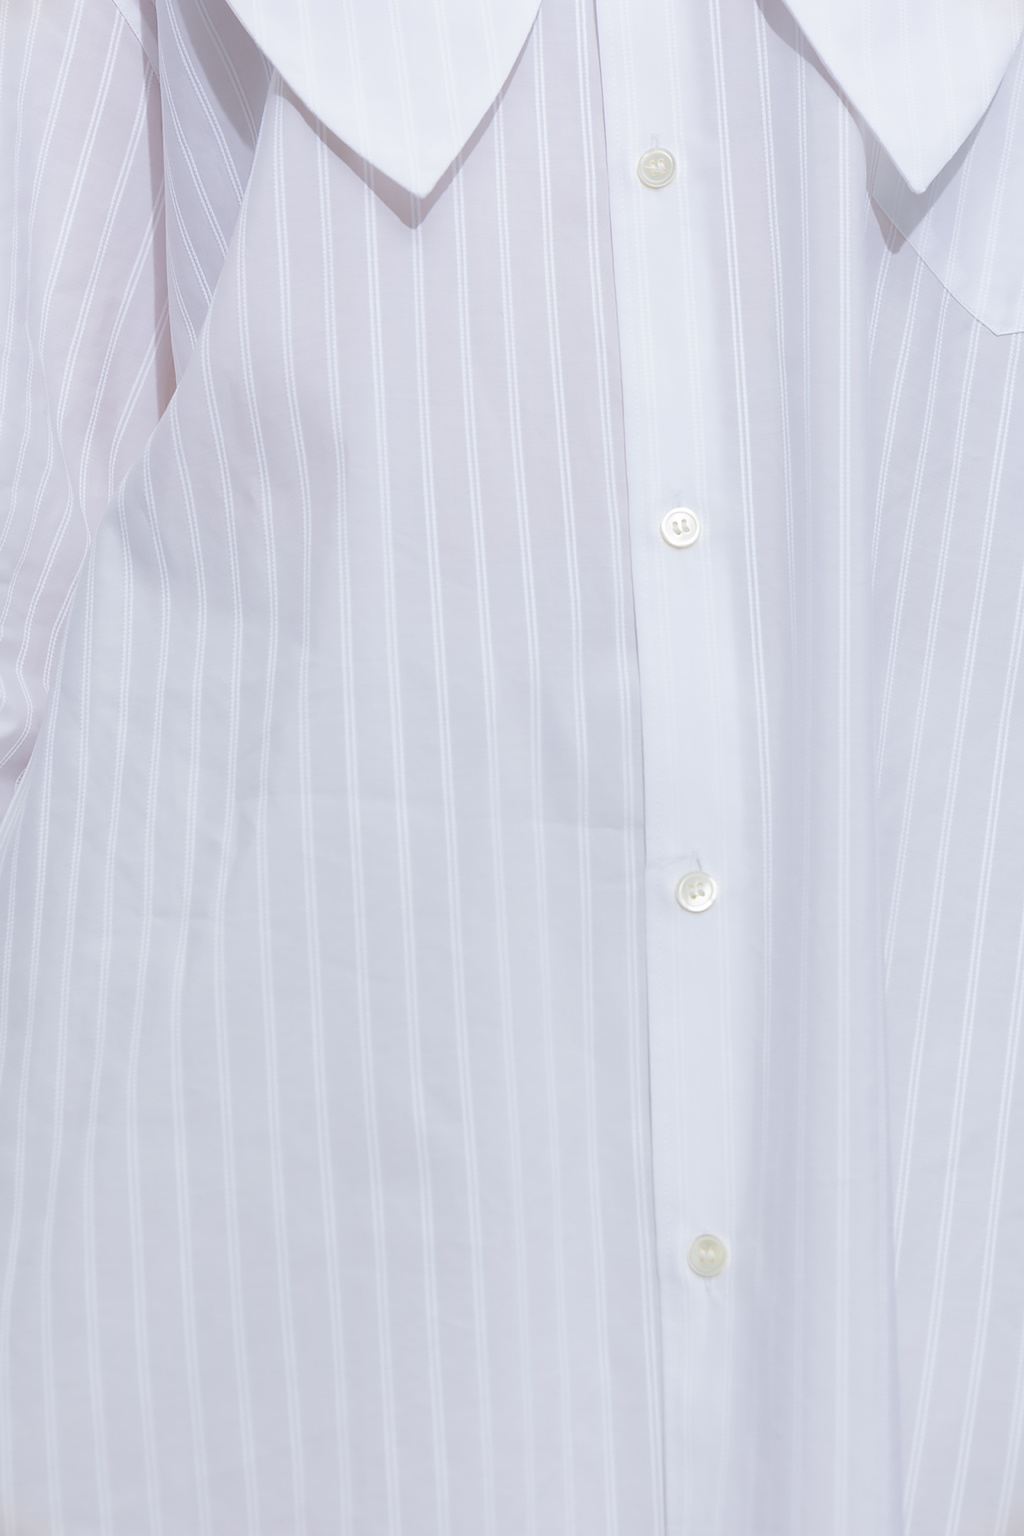 Marni Pinstriped shirt